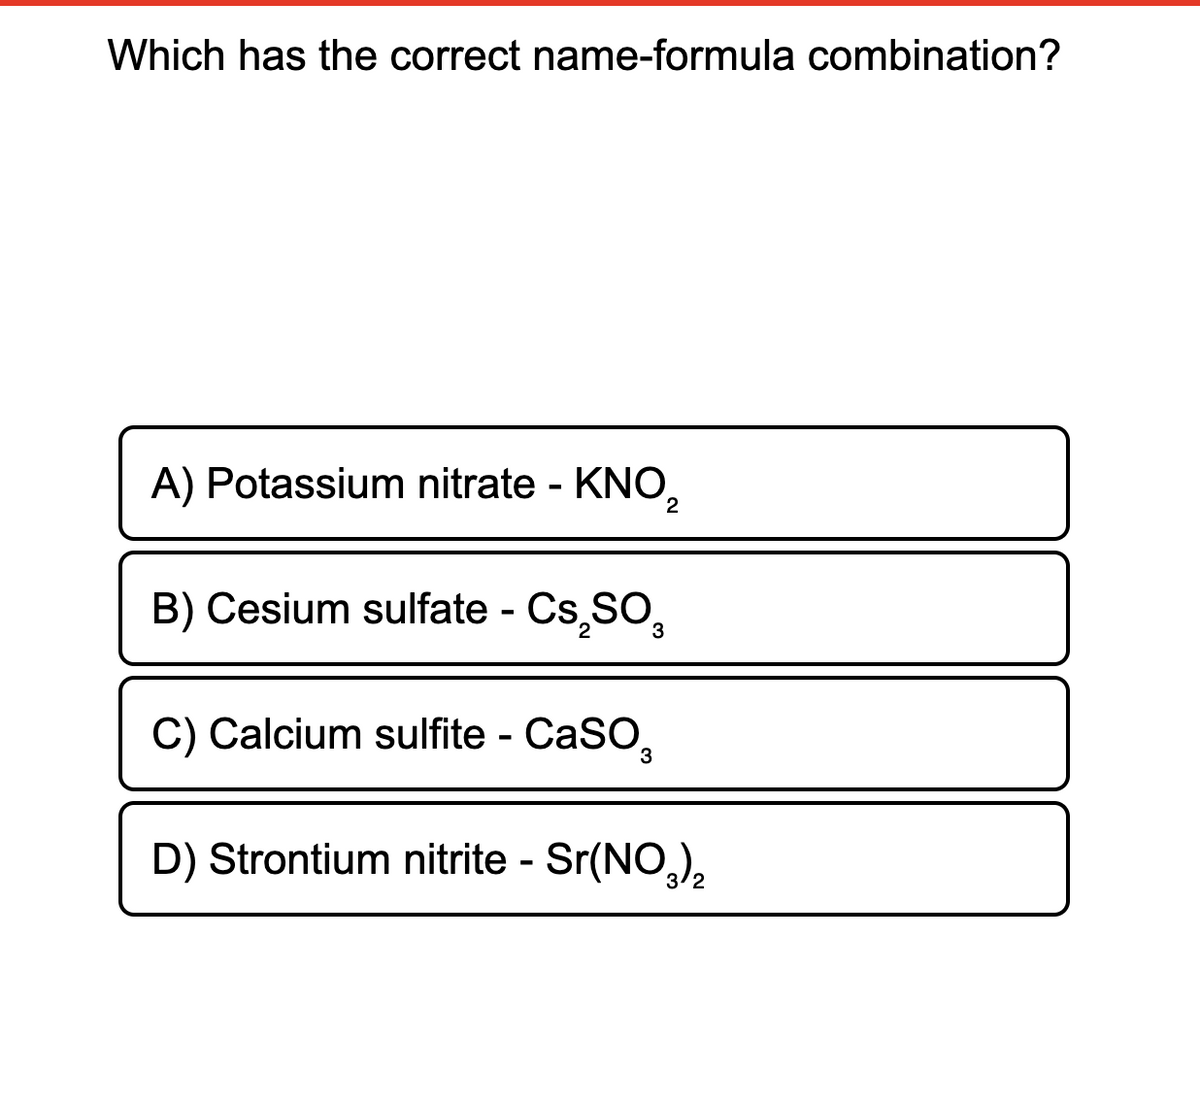 Which has the correct name-formula combination?
A) Potassium nitrate - KNO,
B) Cesium sulfate - Cs,SO,
%3
C) Calcium sulfite - CaSO,
D) Strontium nitrite - Sr(NO,),
